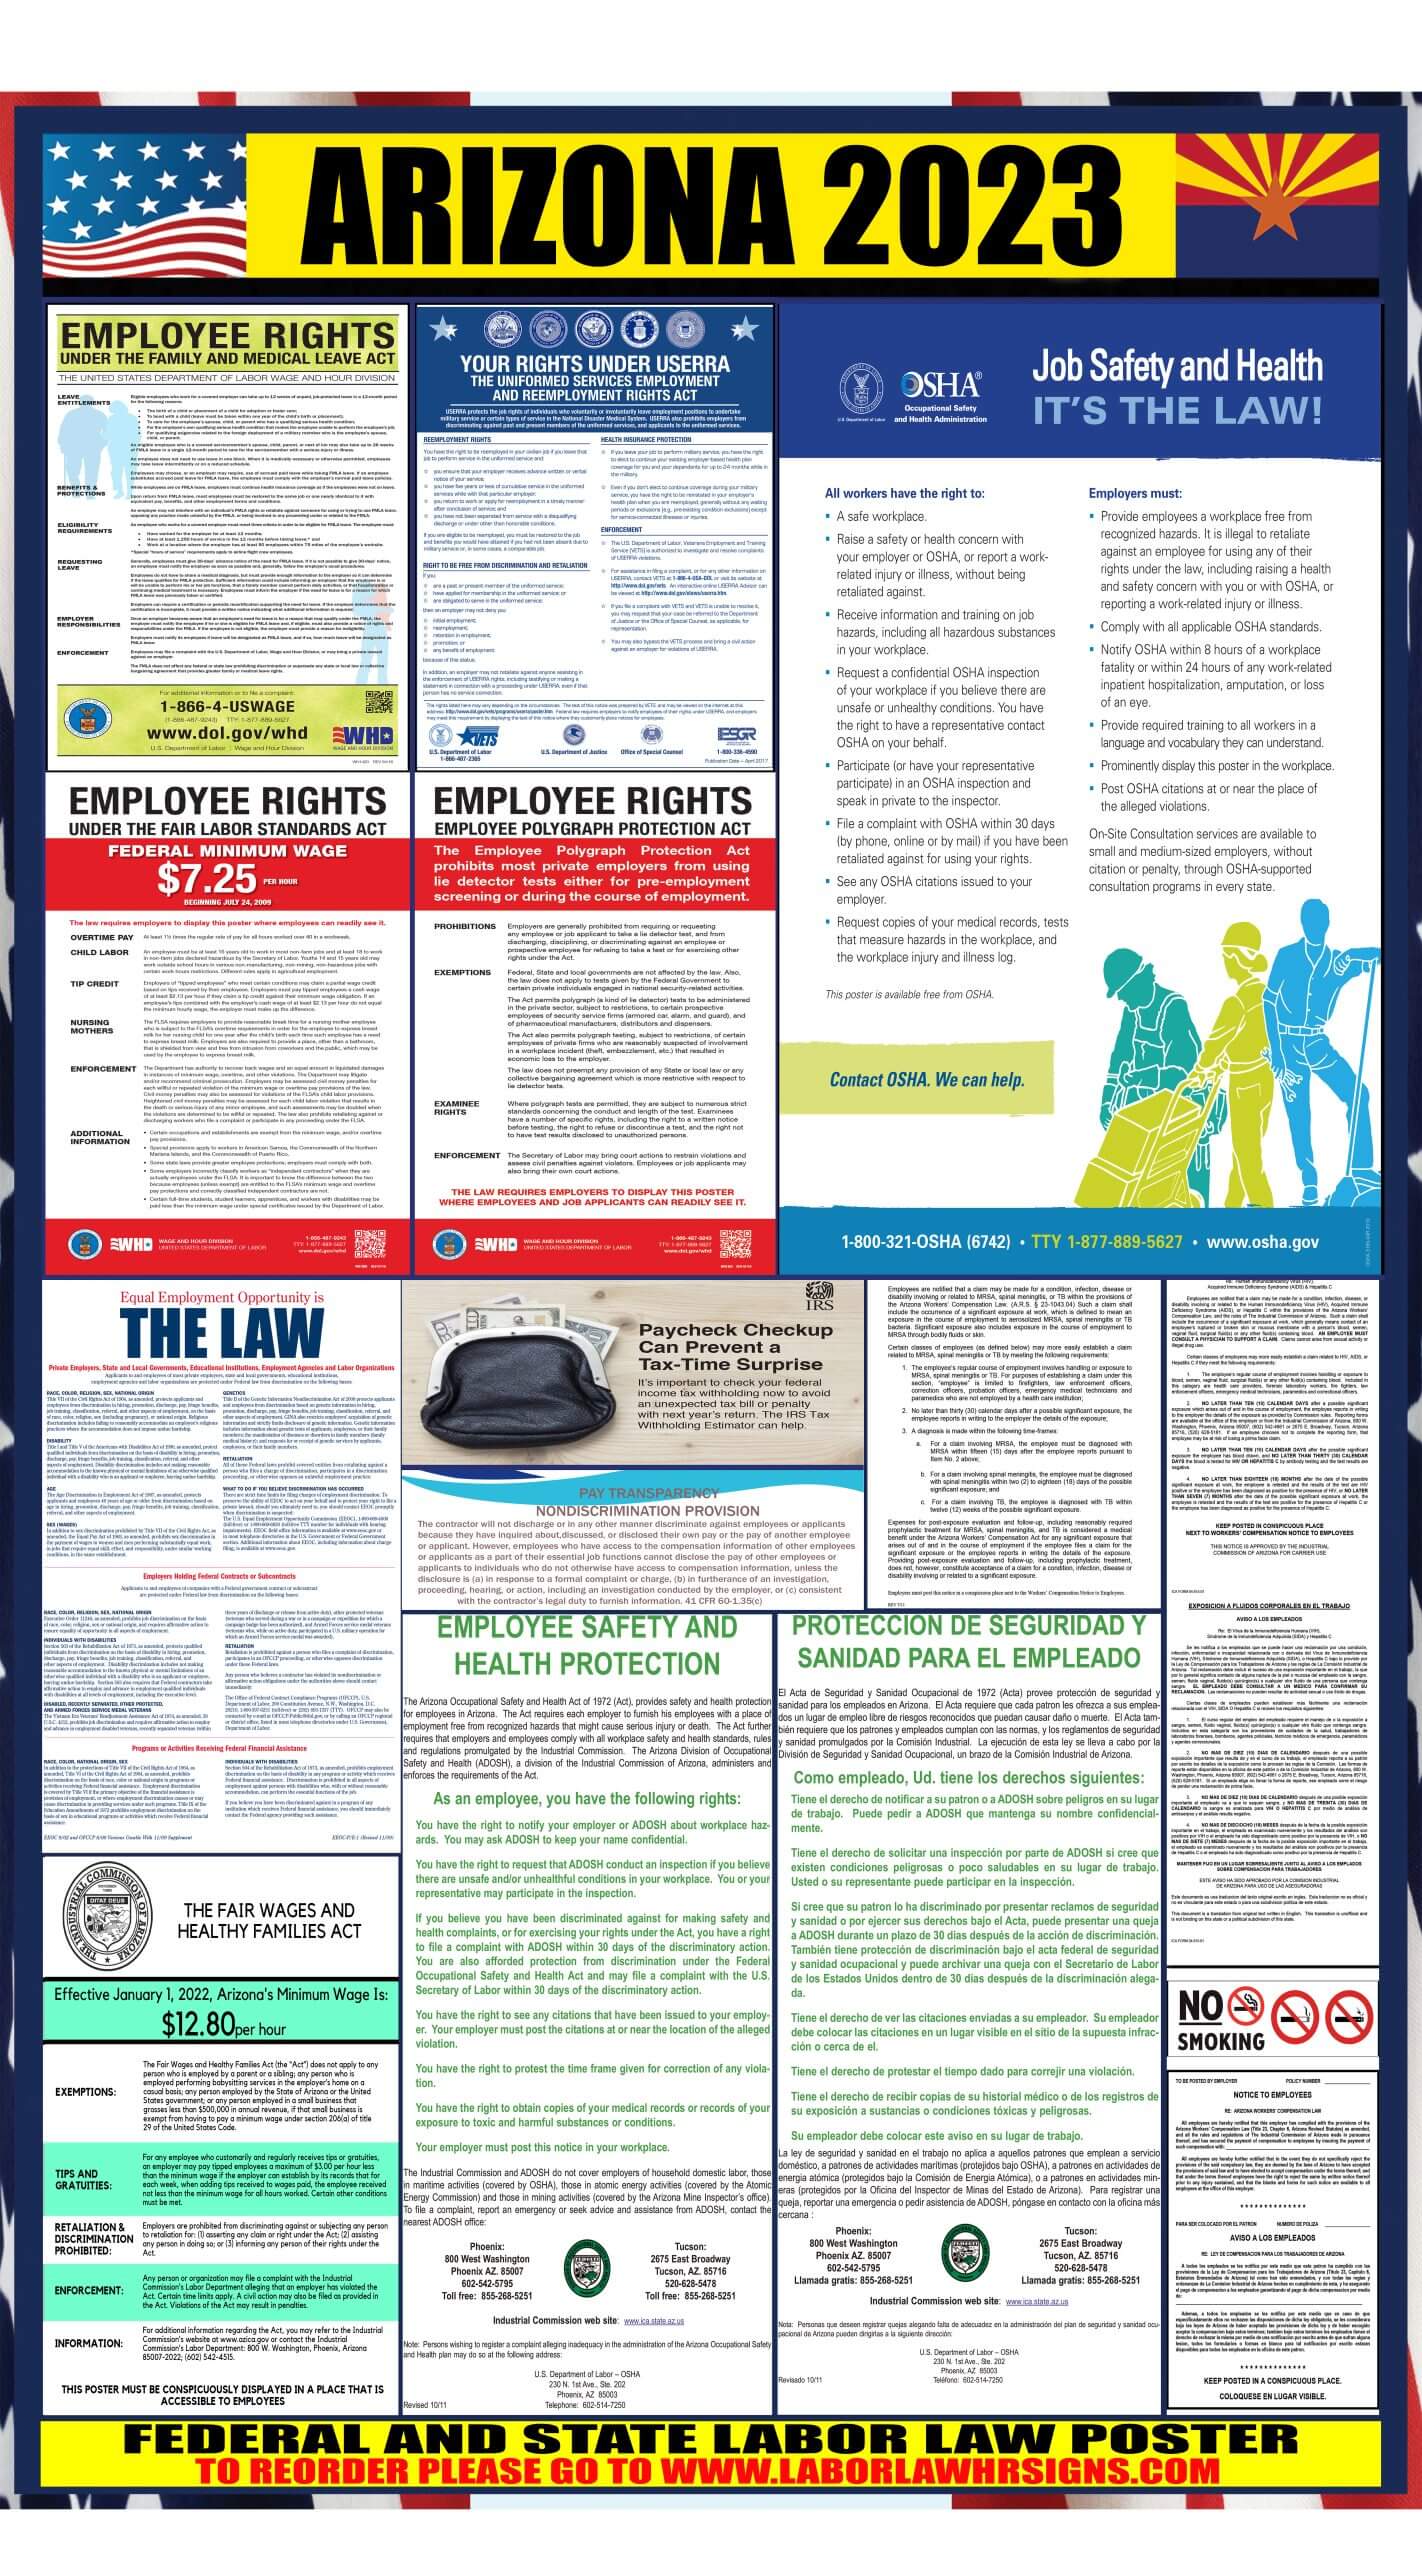 20 W x 26 H OSHA Compliant AZ State J J 20 W x 26 H English Laminated Poster Set for Workplace Compliance Keller & Associates 2019 Arizona & Federal Labor Law 2-Poster Set & Federal 